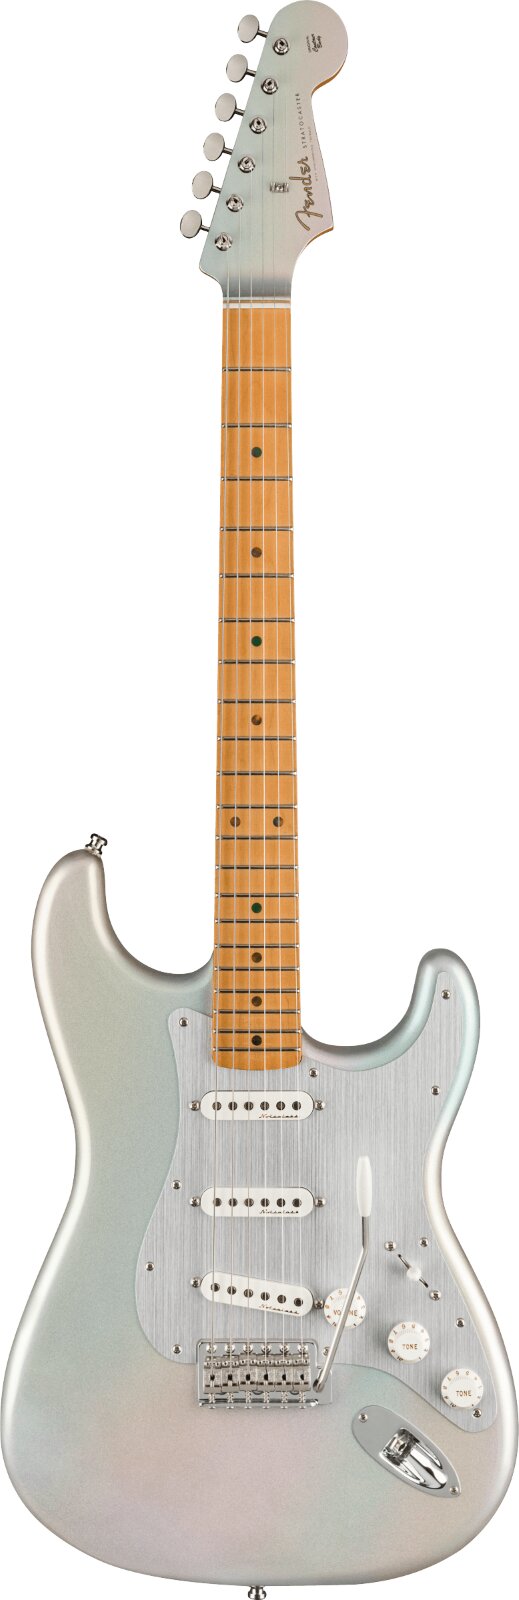 Fender HER Stratocaster Maple Fingerboard Chrome Glow : photo 1